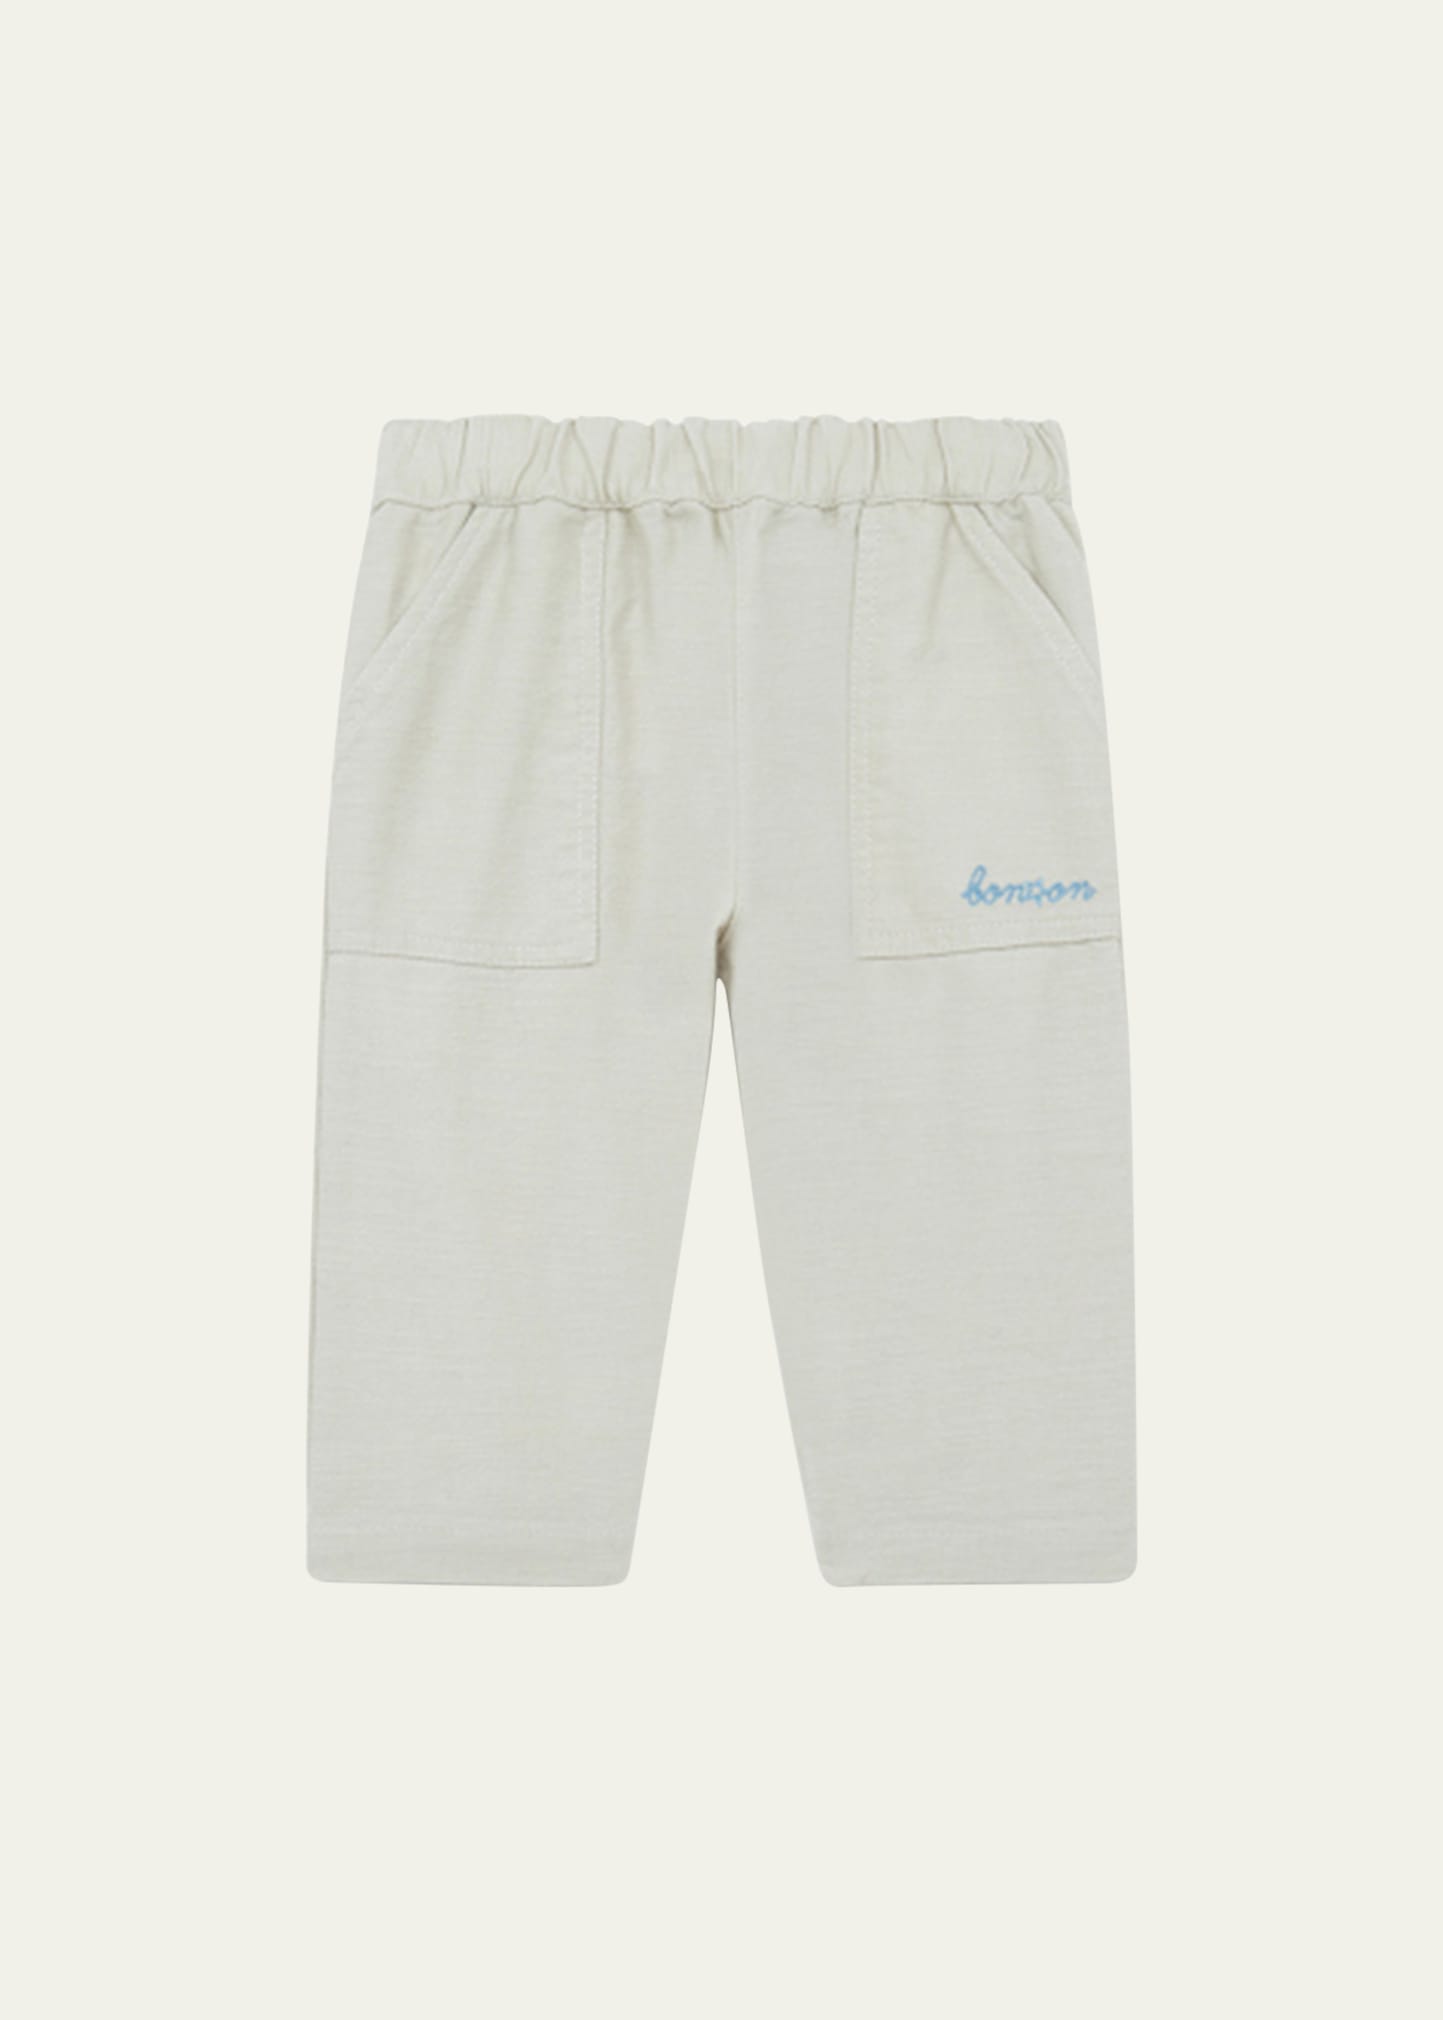 Bonton Boy's Embroidered Cotton Pants, Size 6M-3